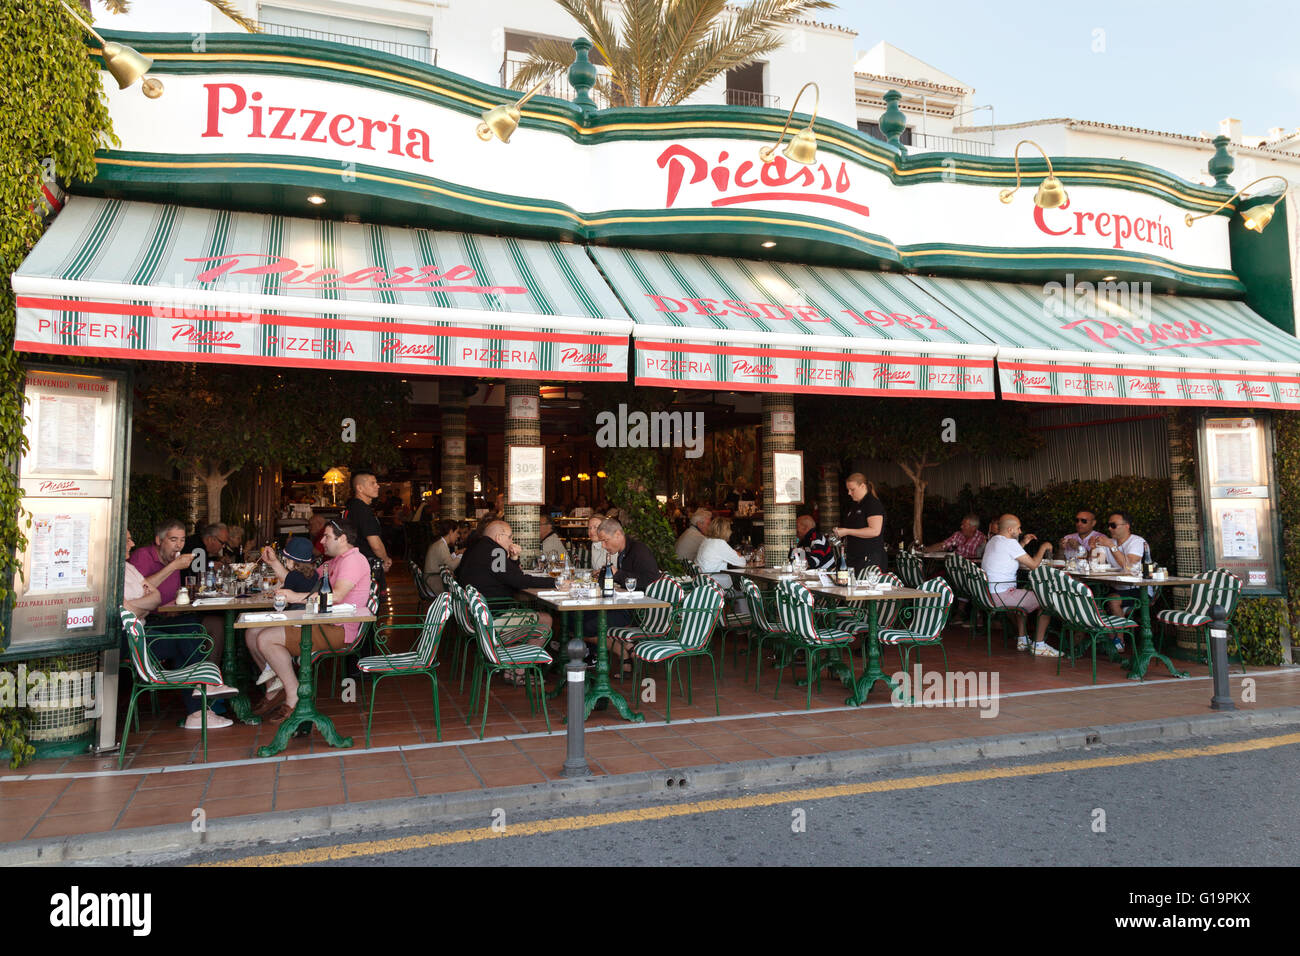 Picasso Pizzeria und Creperie Restaurant außen, Puerto Banus Hafen Marbella Costa del Sol, Andalusien, Spanien Stockfoto